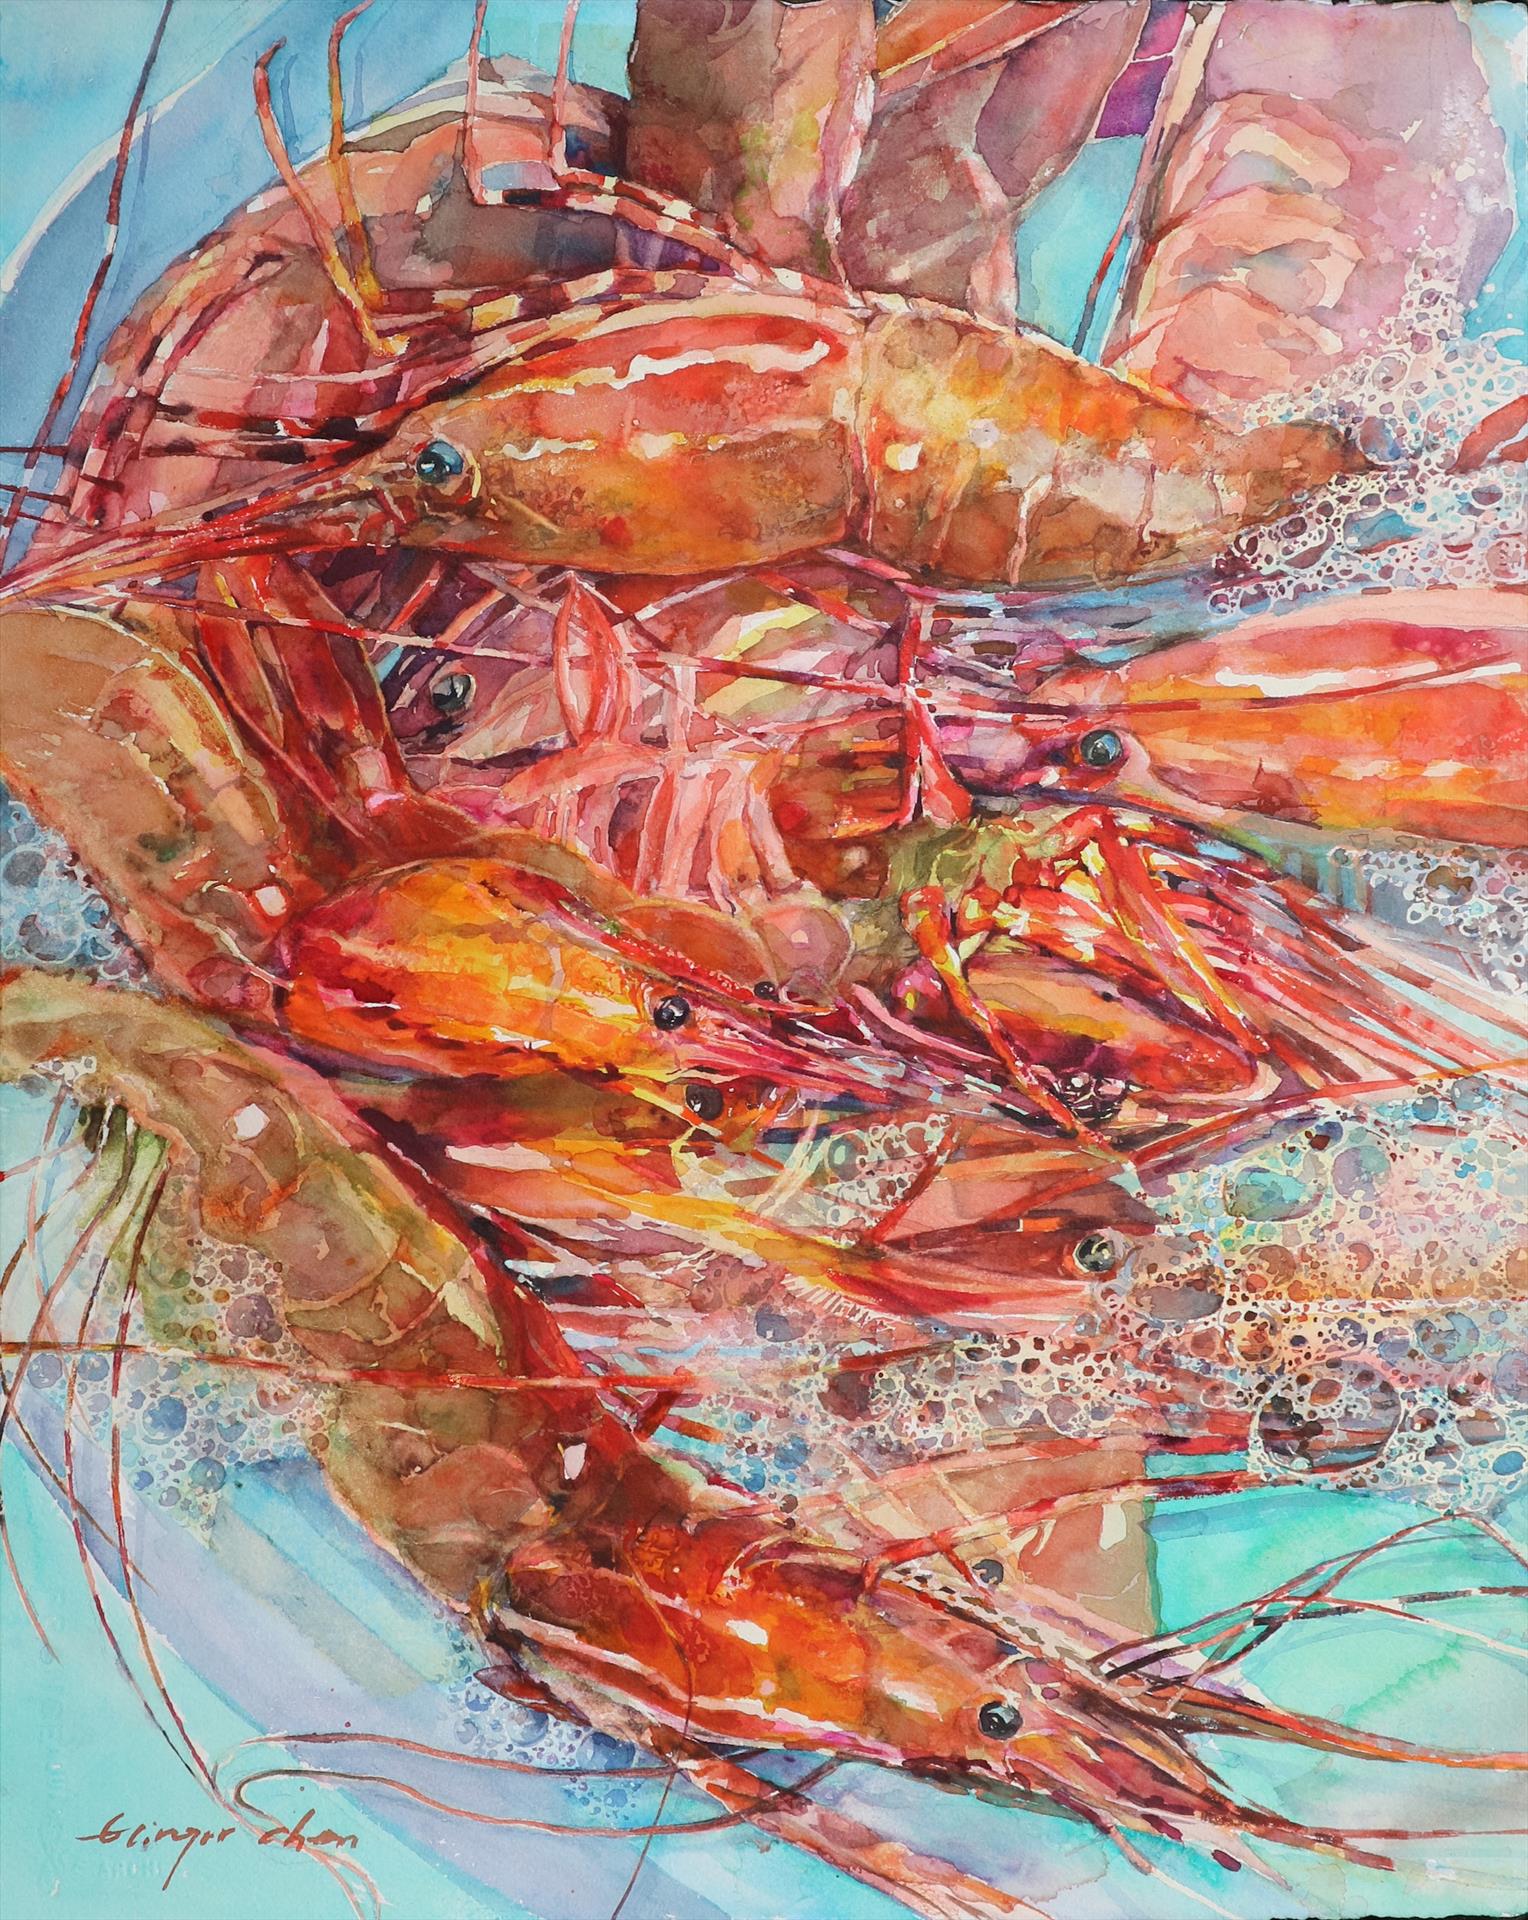 Ginger Chen, "Shrimp," watercolor, 20 x 16 in.